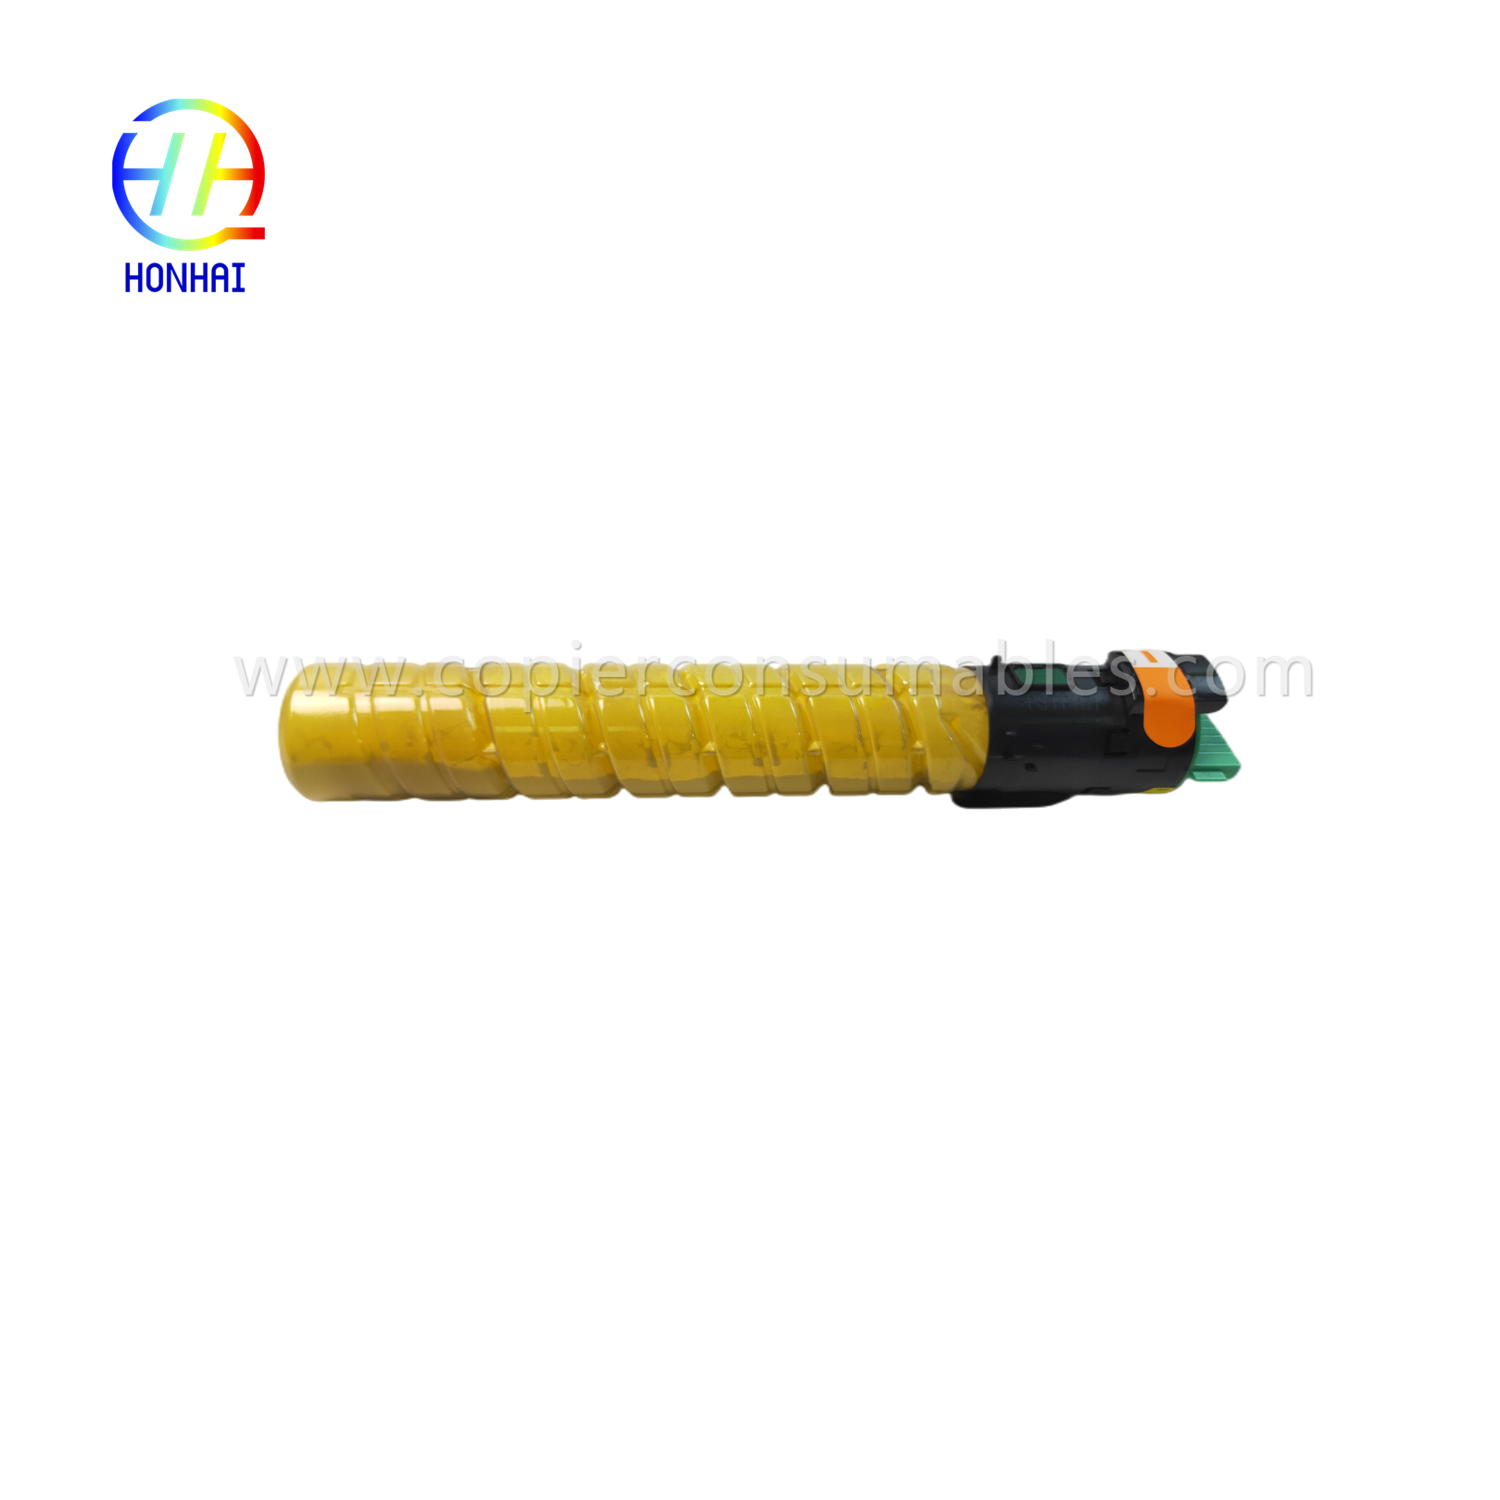 https://c585.goodao.net/toner-cartridge- yellow-for-ricoh-aficio-mpc2051-mpc2551-841501-product/